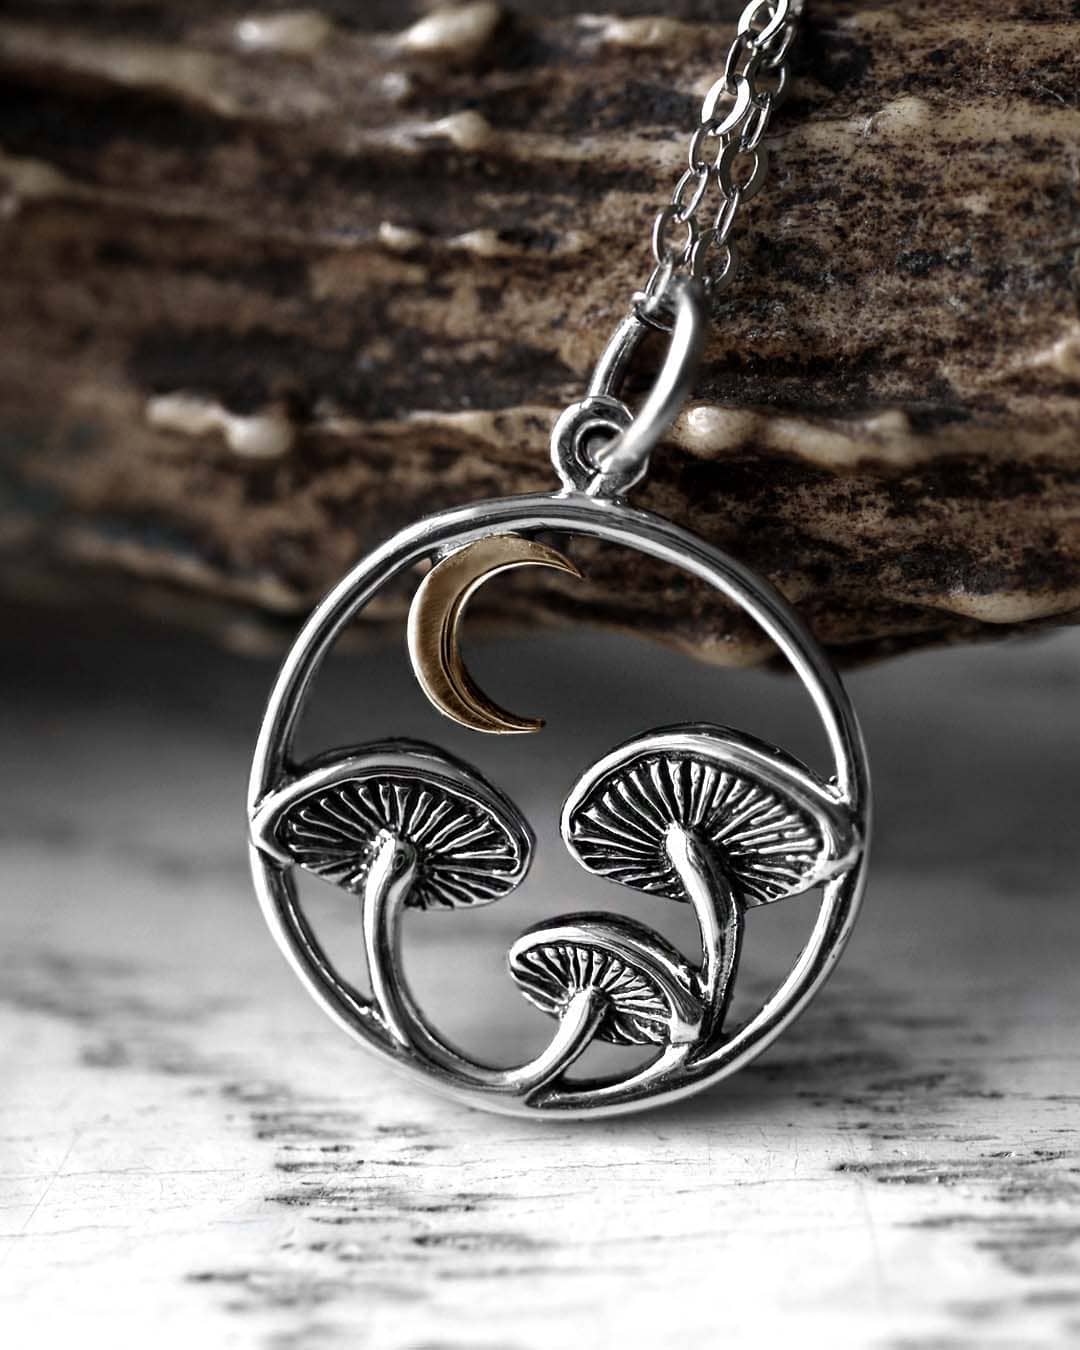 Silver Crescent Moon Pendant Mood Necklace